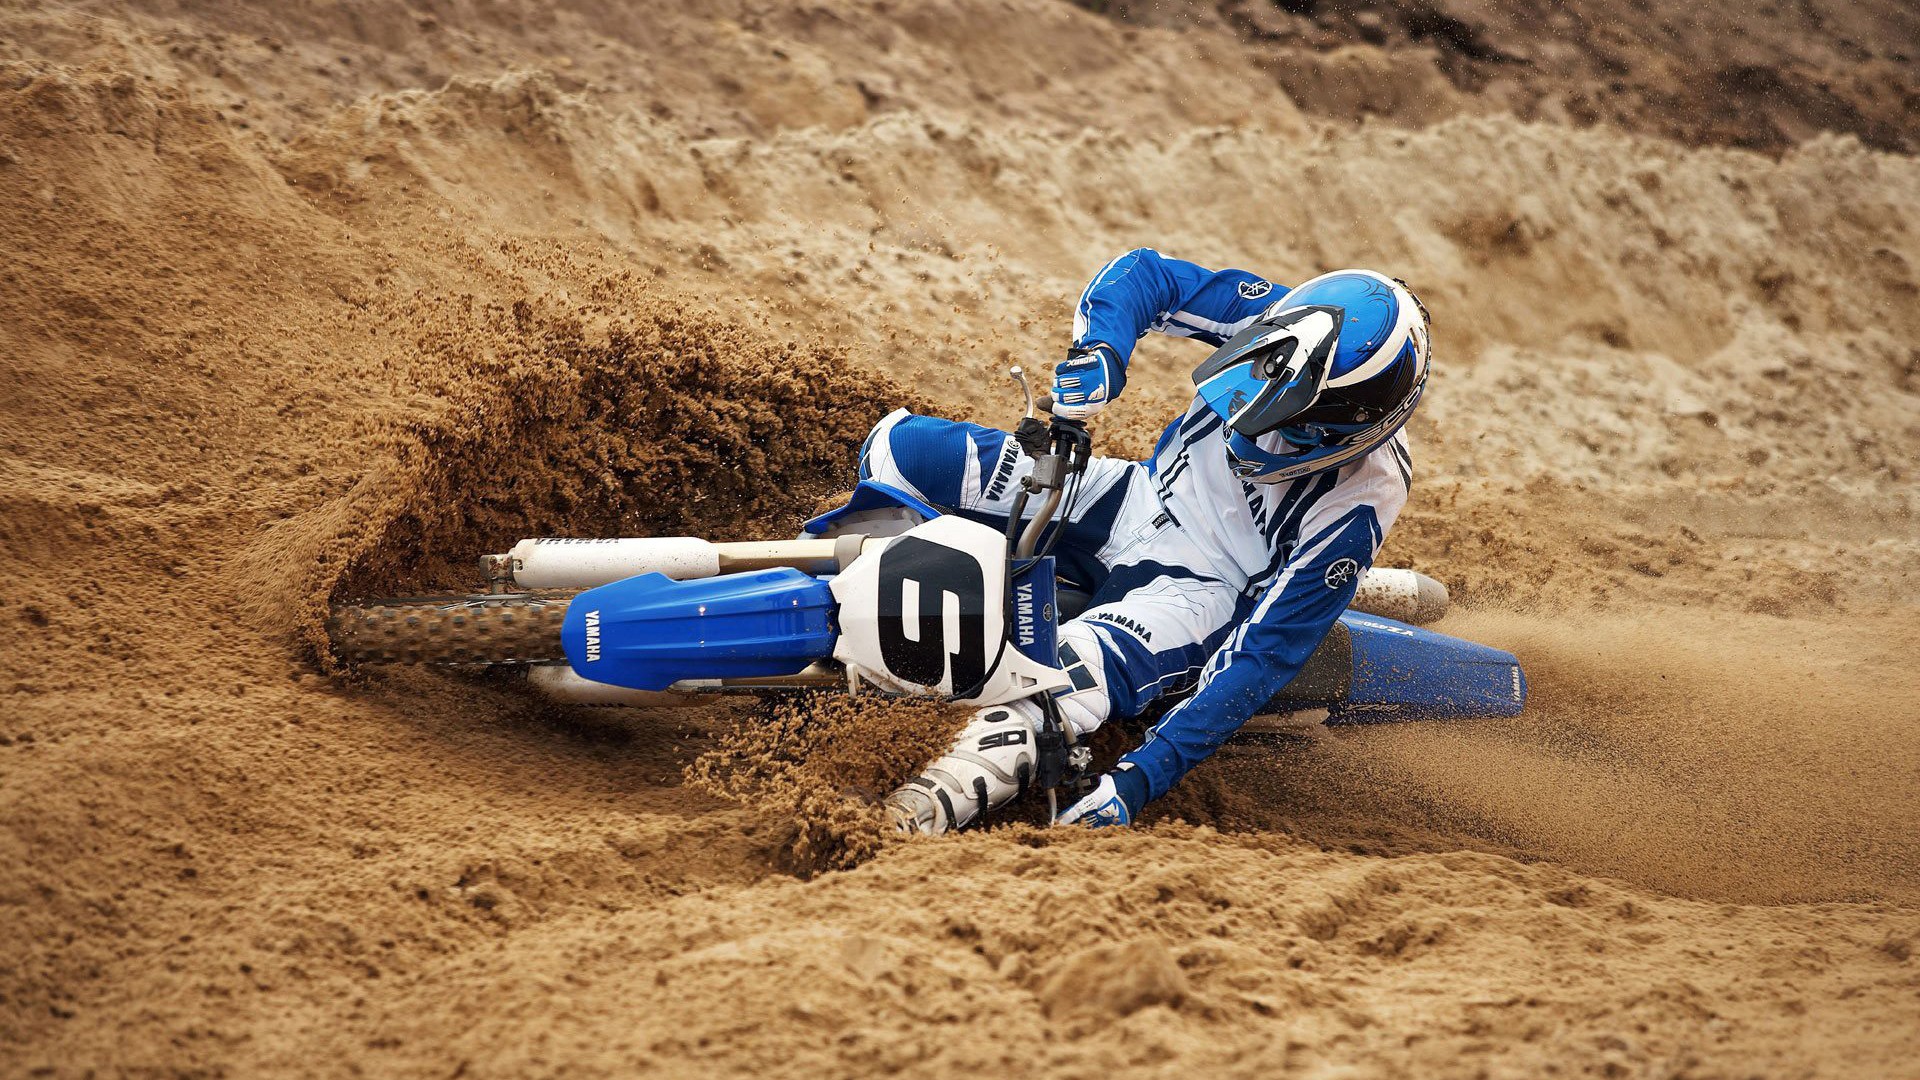 Home Motorcycle HD Wallpaper Yamaha Dirt Bike Sand Motocross